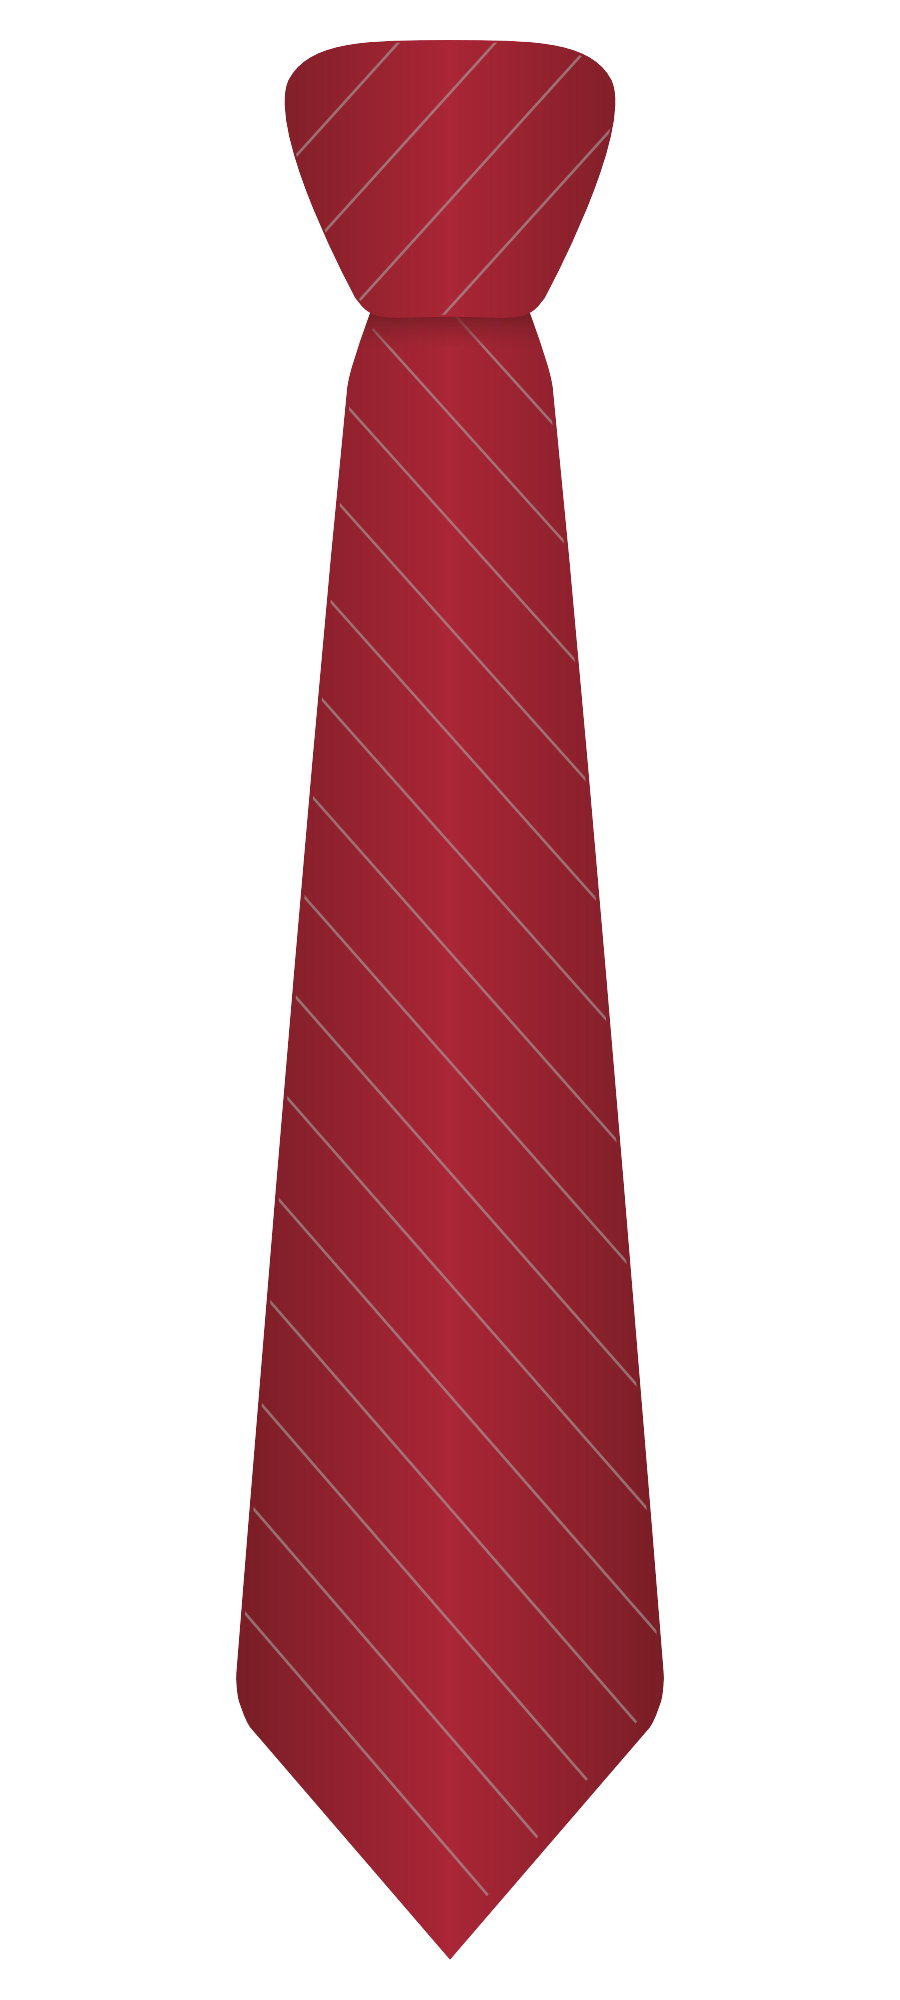 necktie png transparent image pngpix #23592